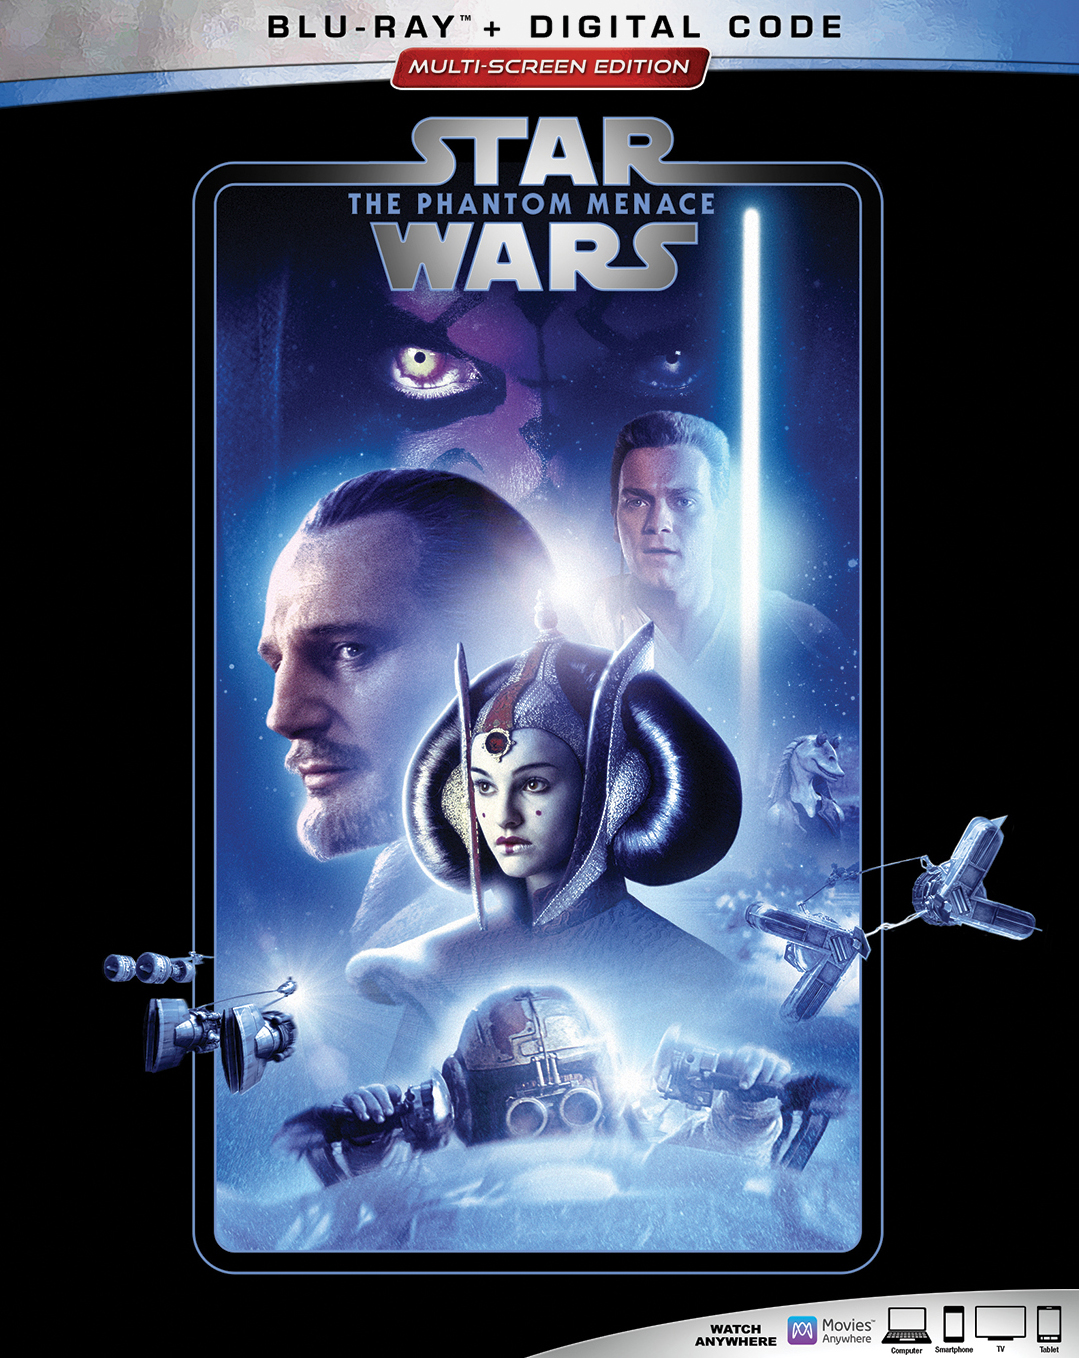 Wars: The Menace [Includes Digital Copy] [Blu-ray] [1999] - Best